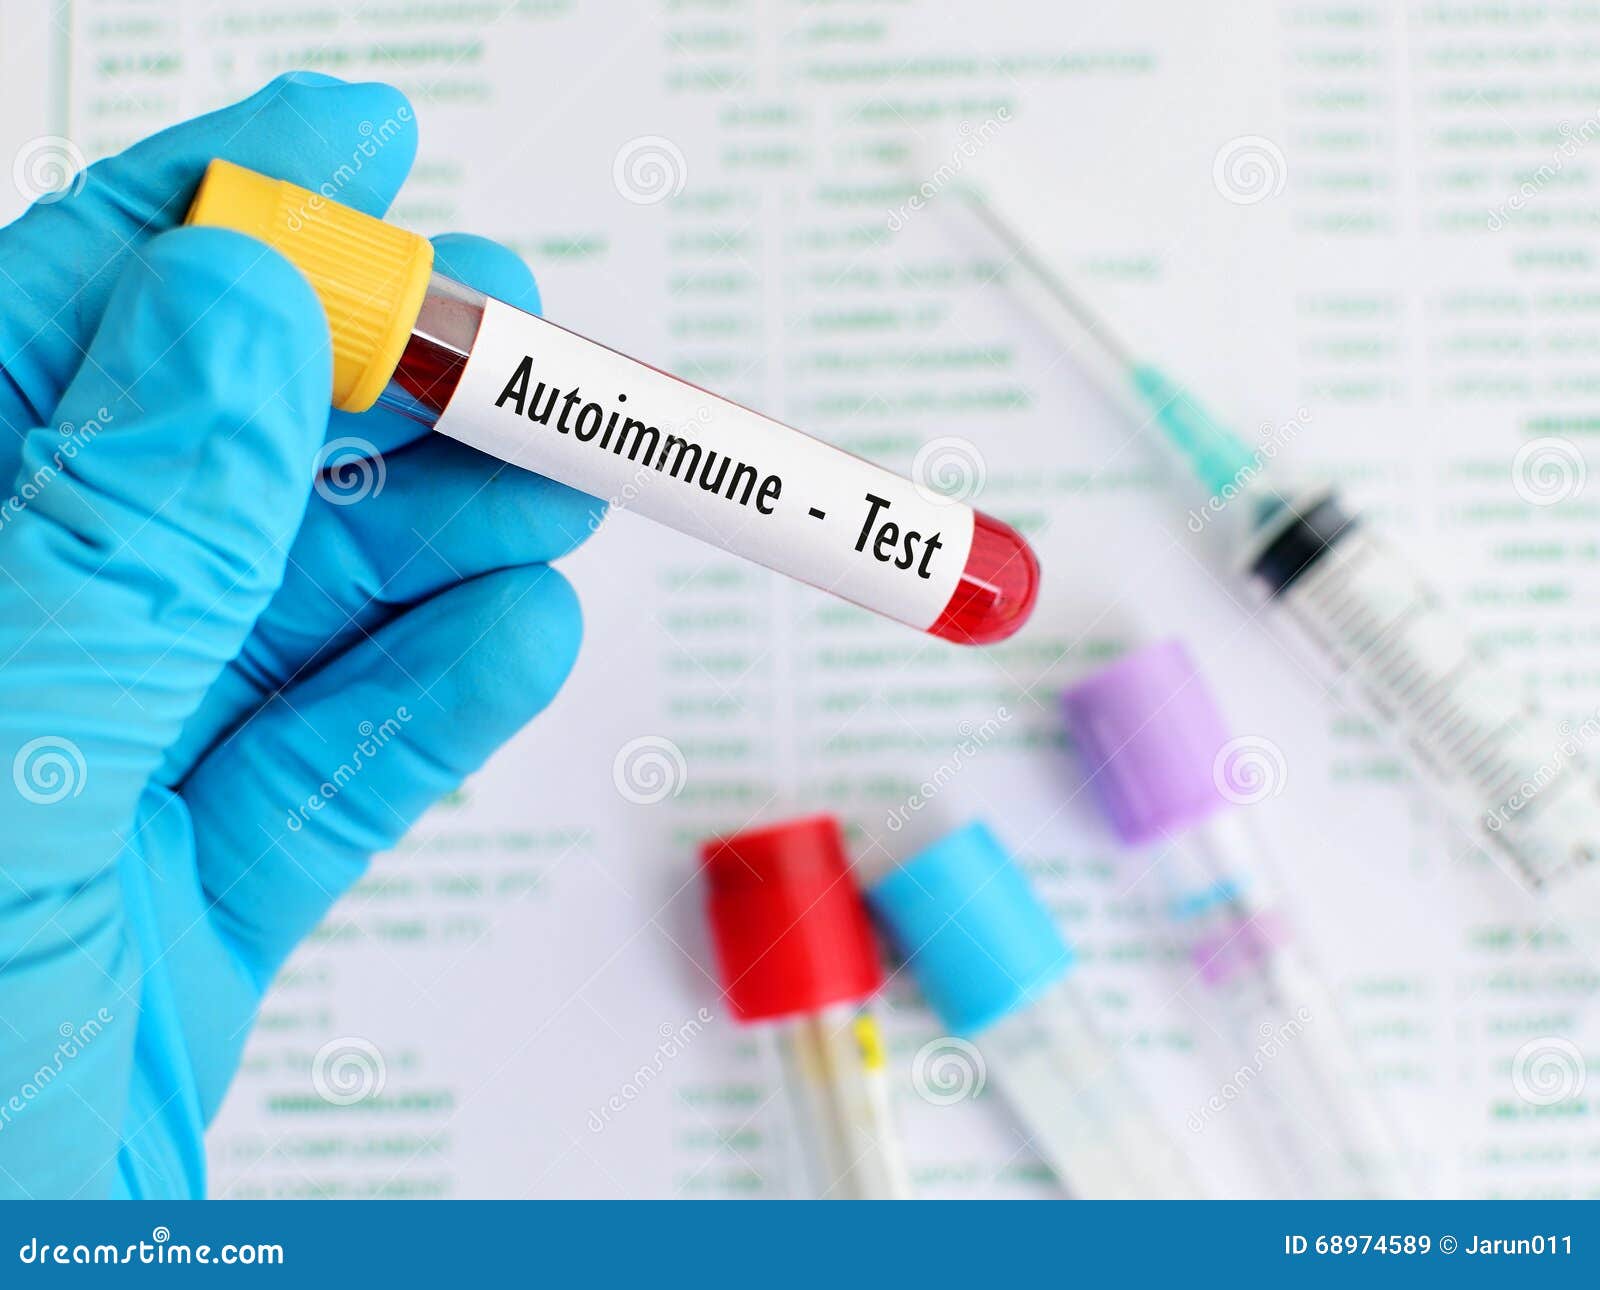 blood test for autoimmune disease